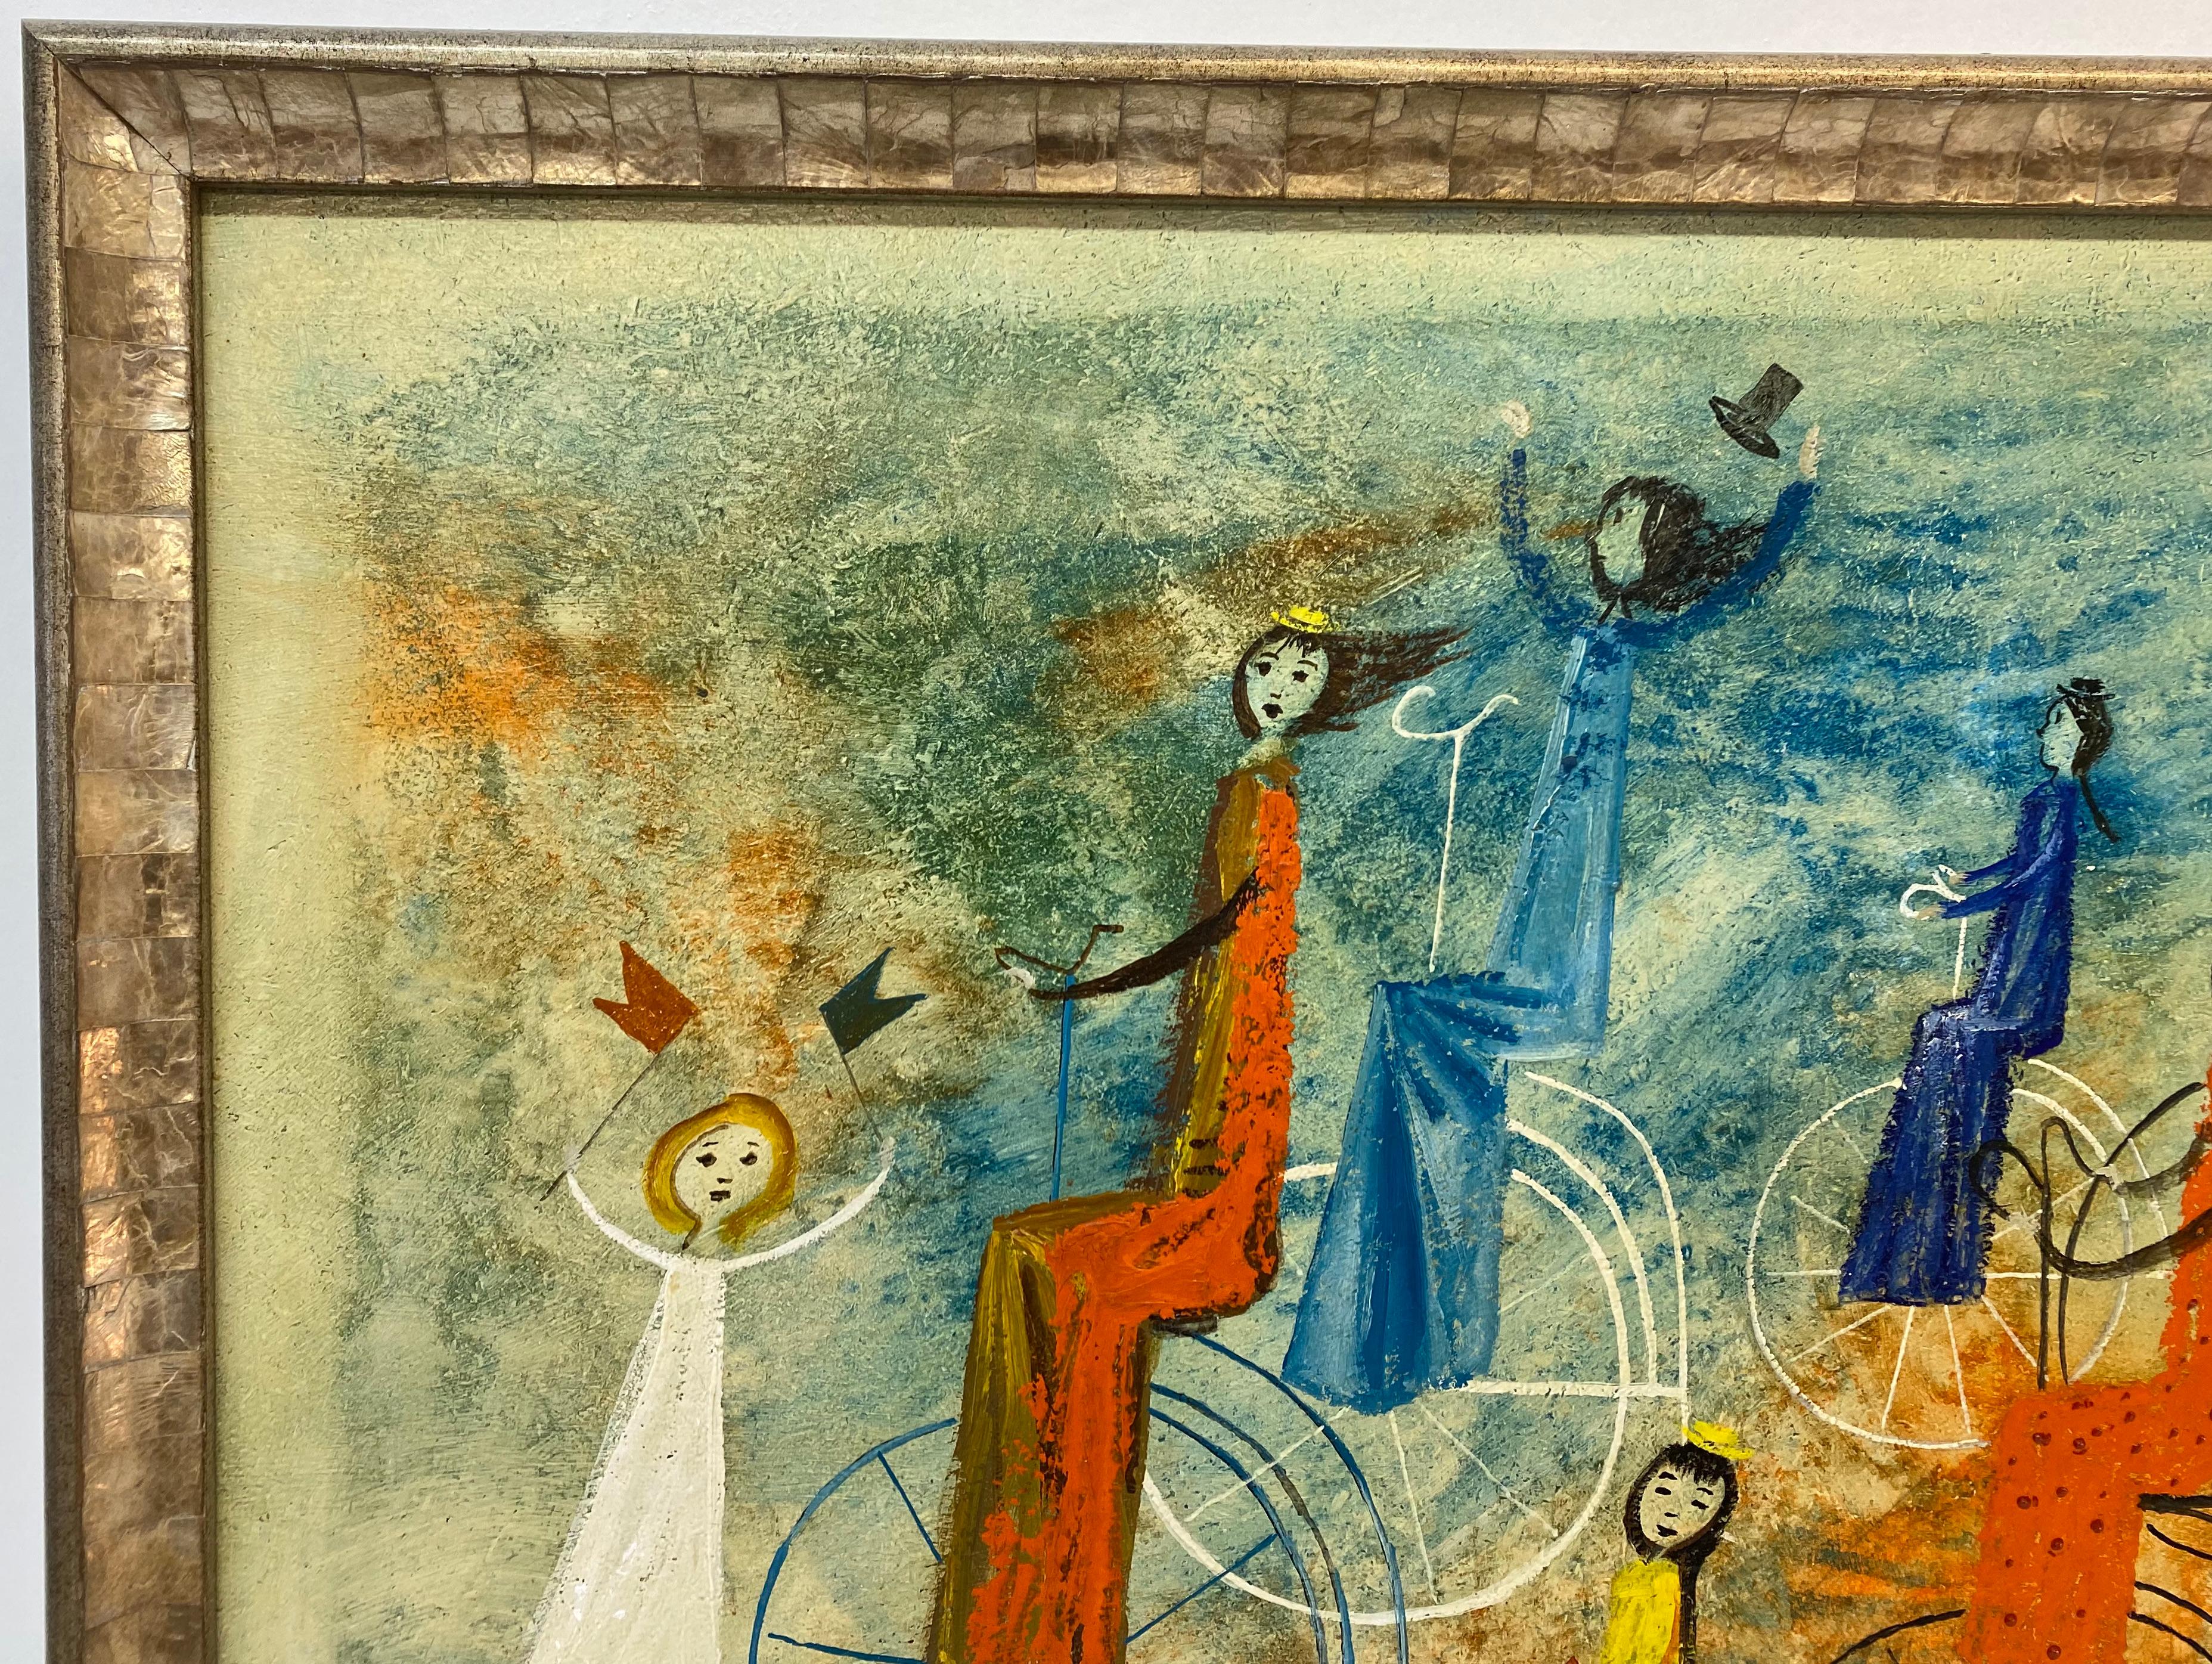 Irving Amen Girls Bicycle Parade Original Oil Painting c.1960s

Original oil on masonite

Dimensions 40.5